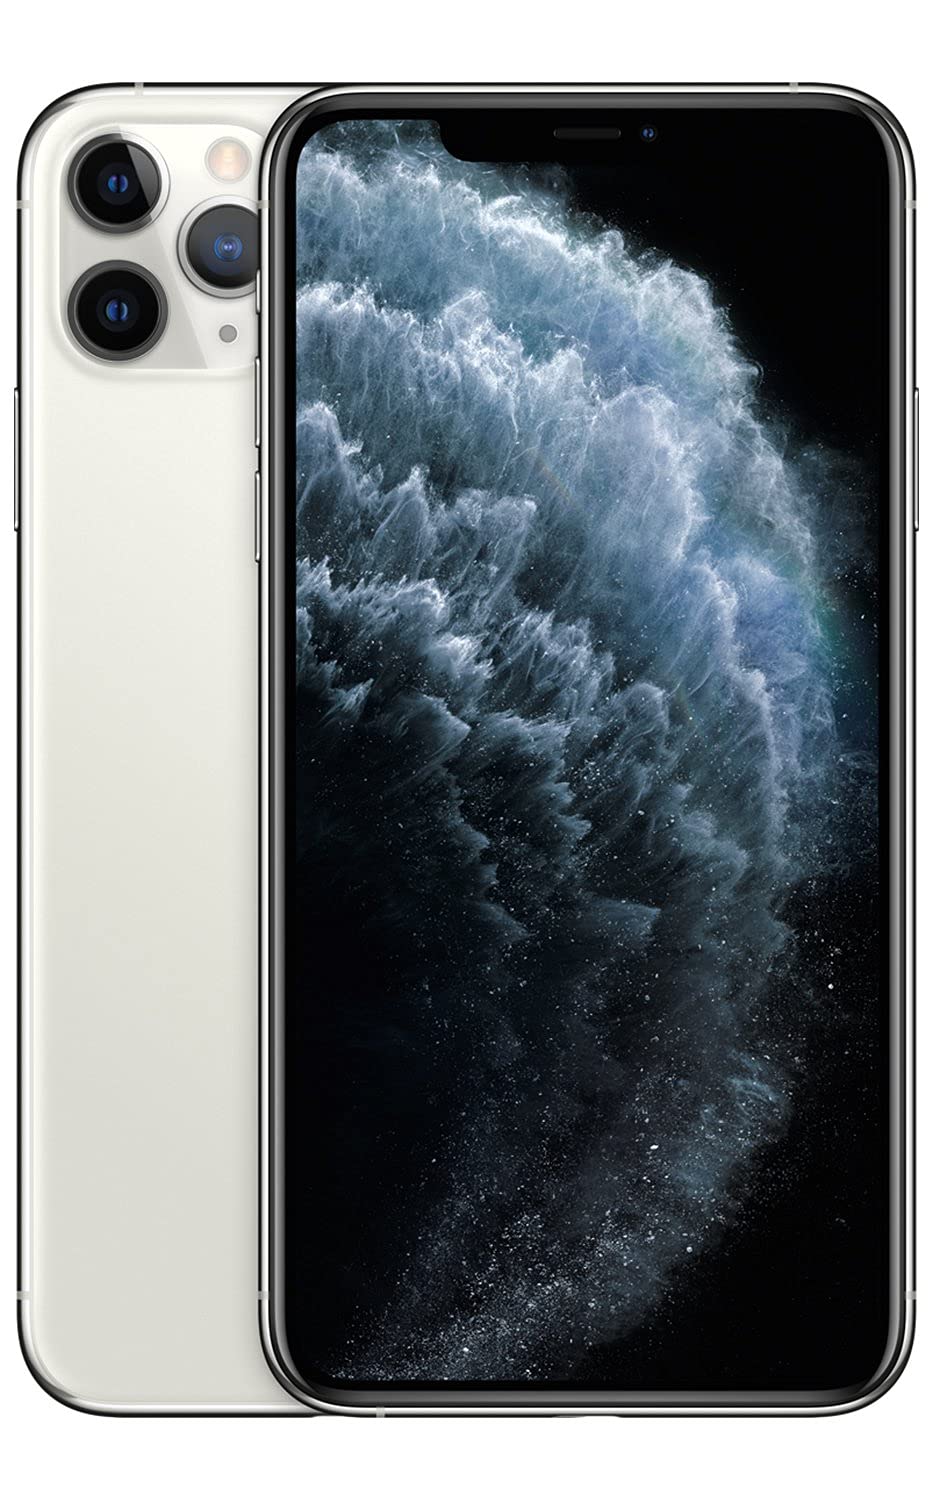 Apple iPhone 11 Pro, 64GB, Silver - Fully Unlocked (Renewed Premium)